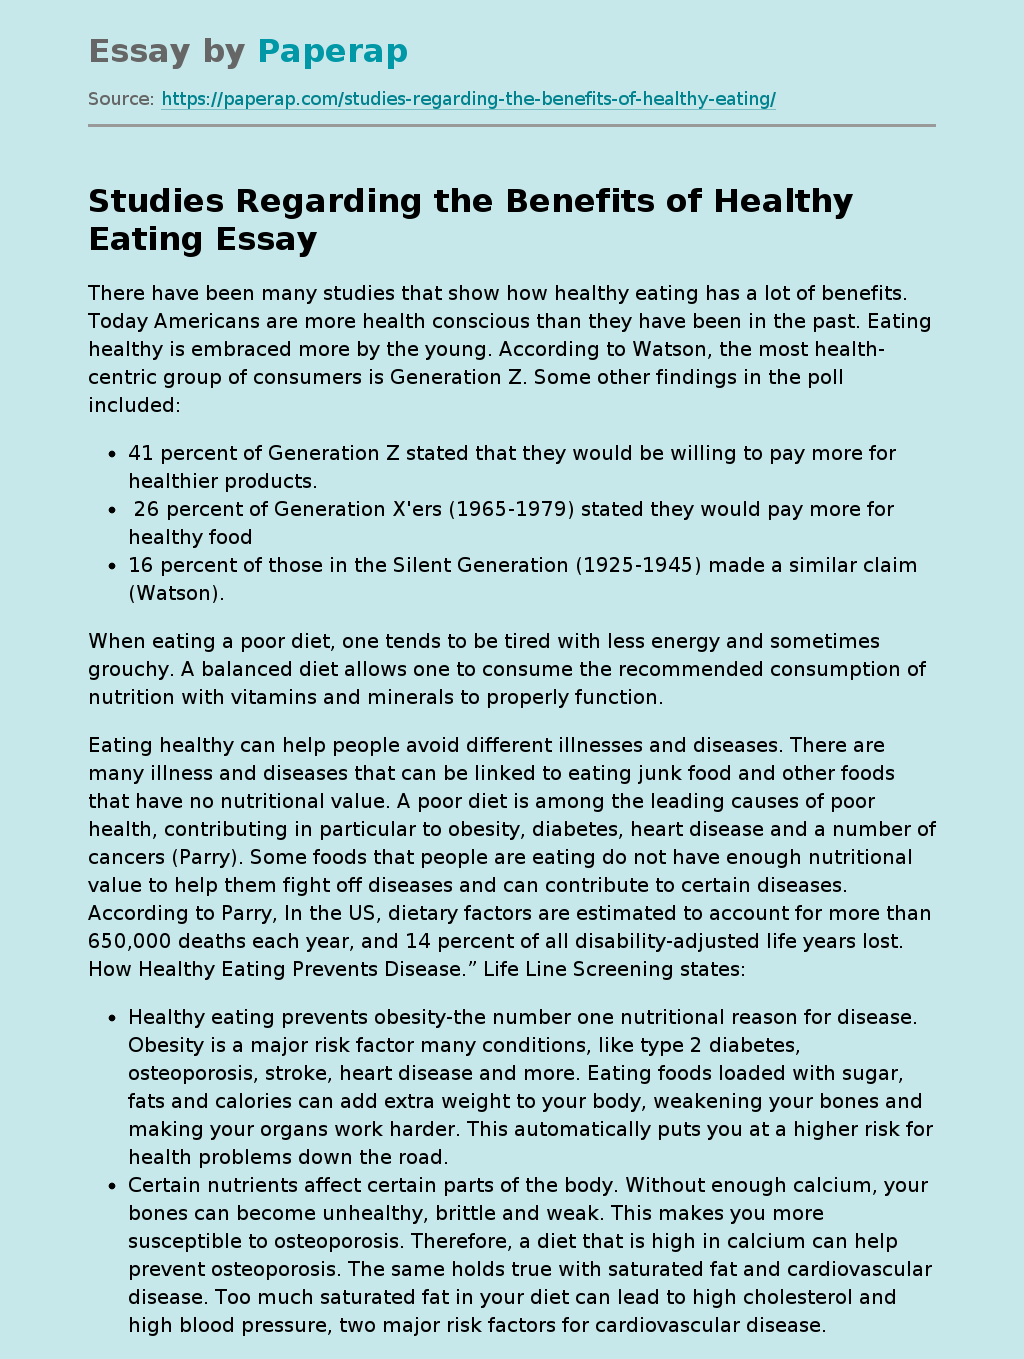 Studies Regarding the Benefits of Healthy Eating